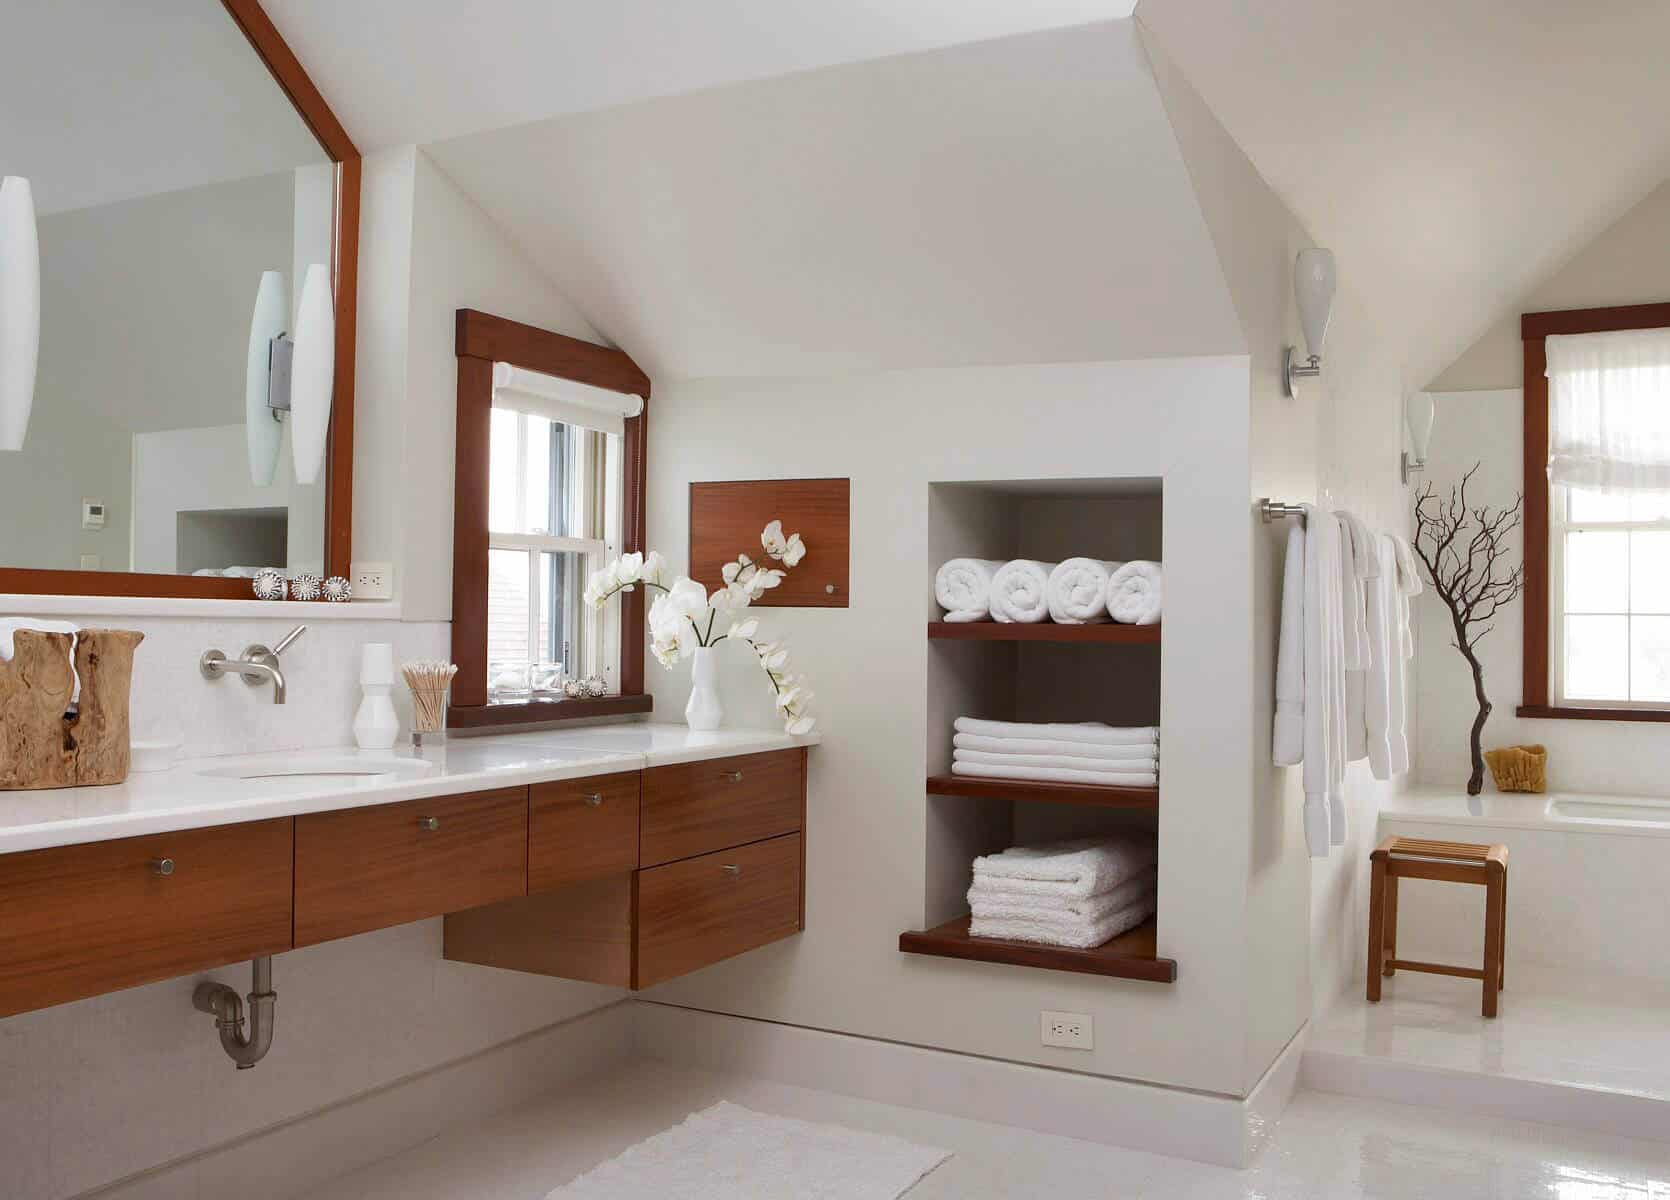 Towel Storage Ideas For Your Bathroom, Bathroom Decor Towel Racks